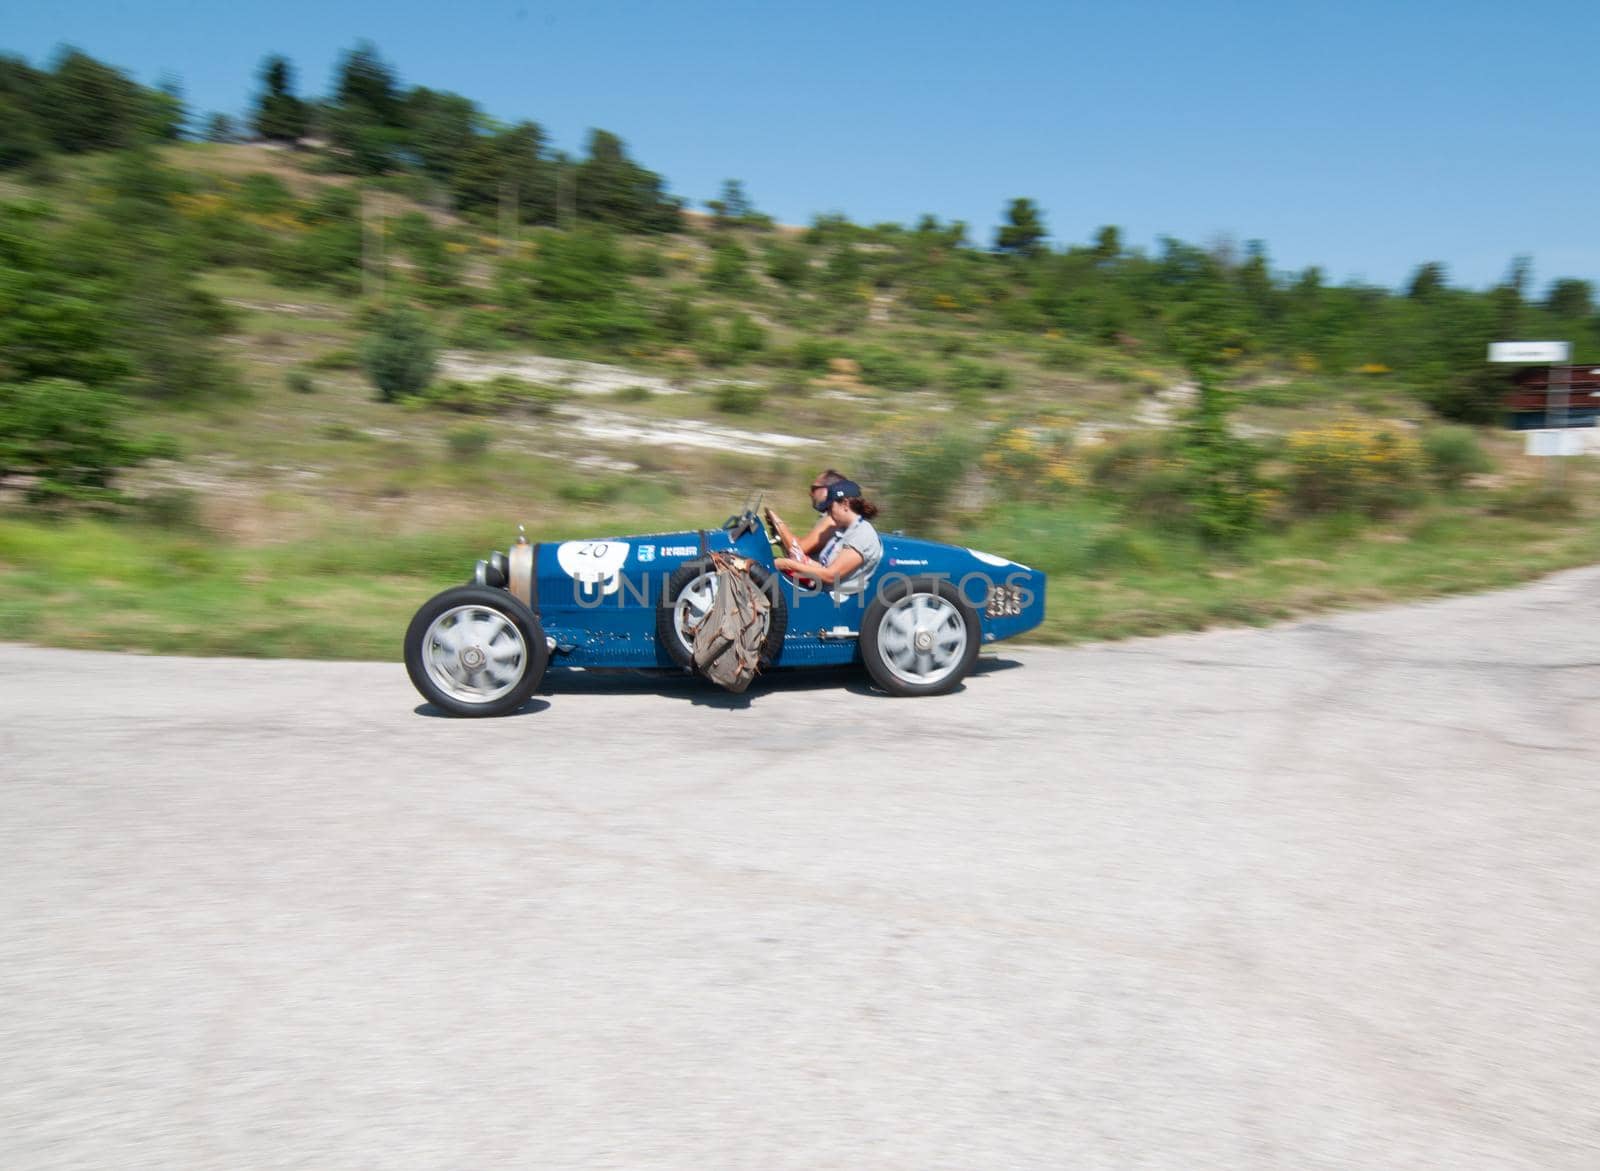 BUGATTI T37 1926 on an old racing car in rally Mille MigLIA by massimocampanari